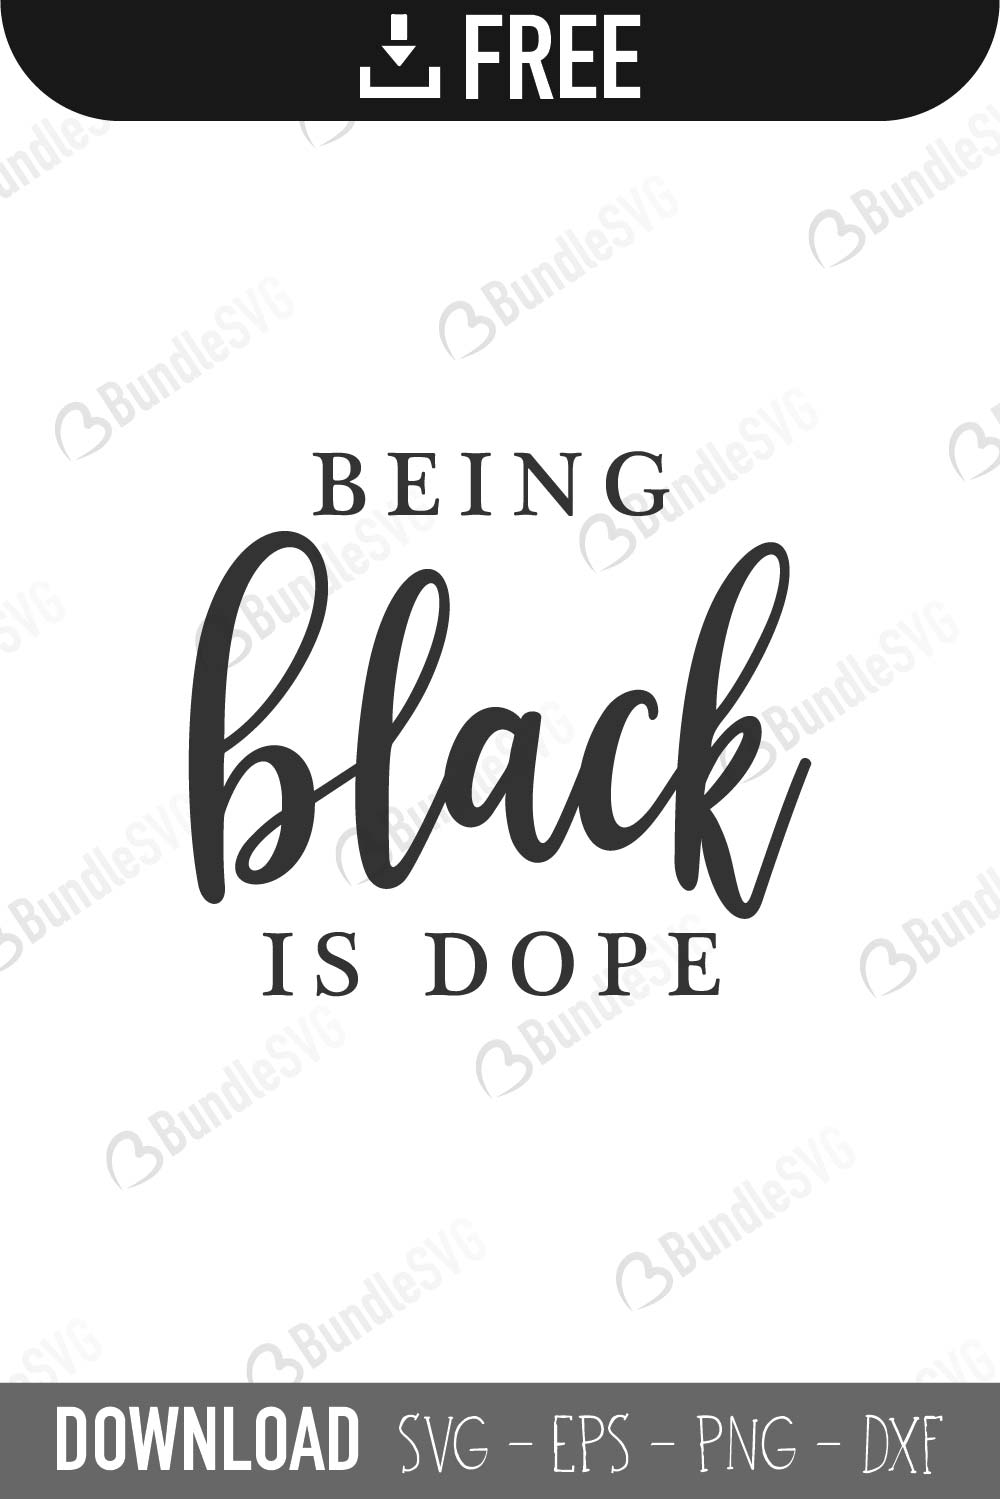 Being Black Is Dope Svg Cut Files Free Download Bundlesvg